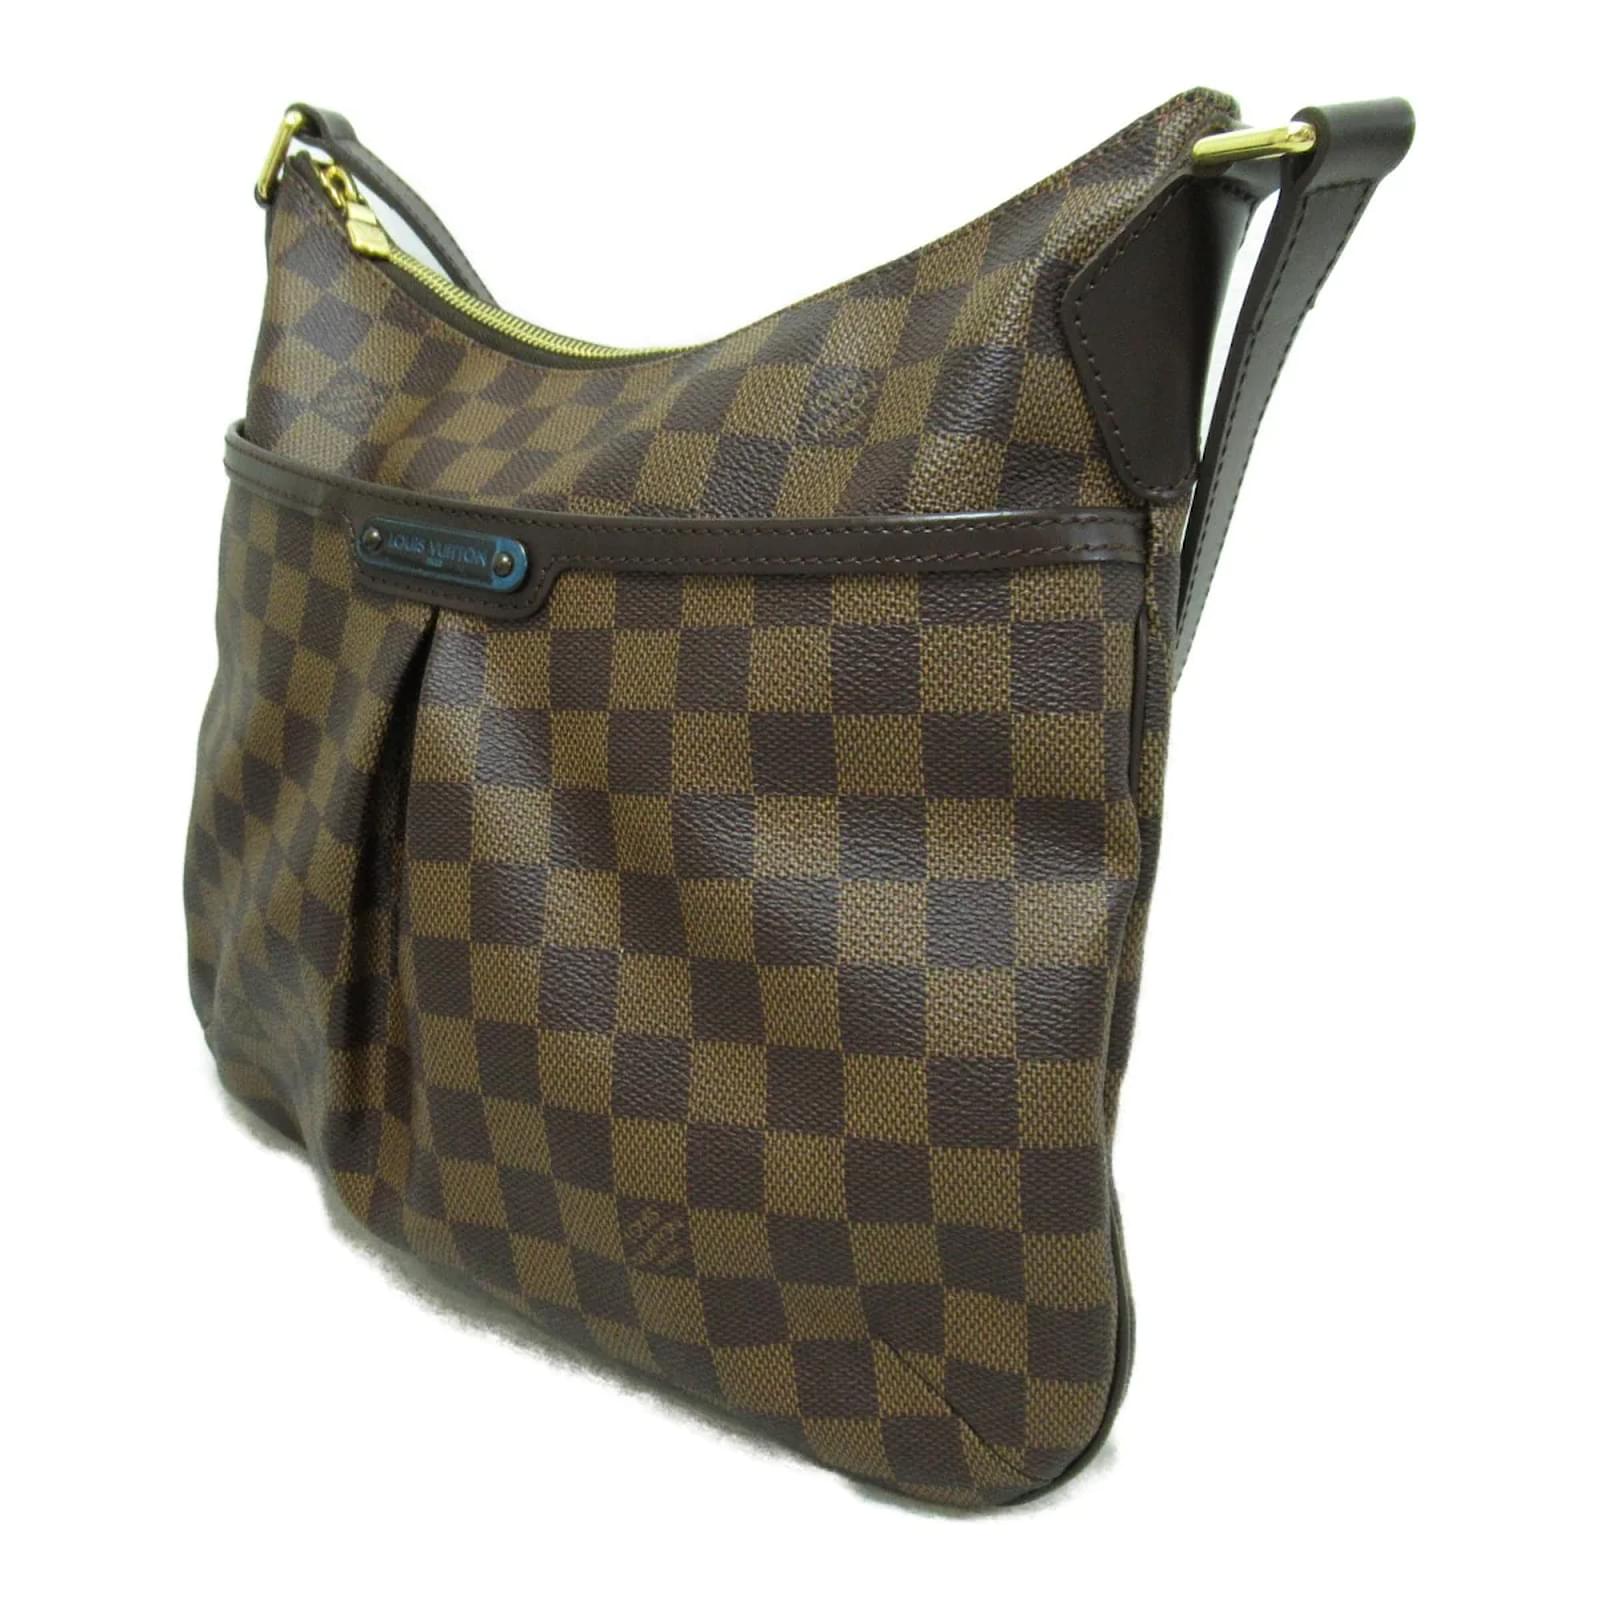 Louis Vuitton Bloomsbury Pm N42251 Ebene Damier Shoulder Bag